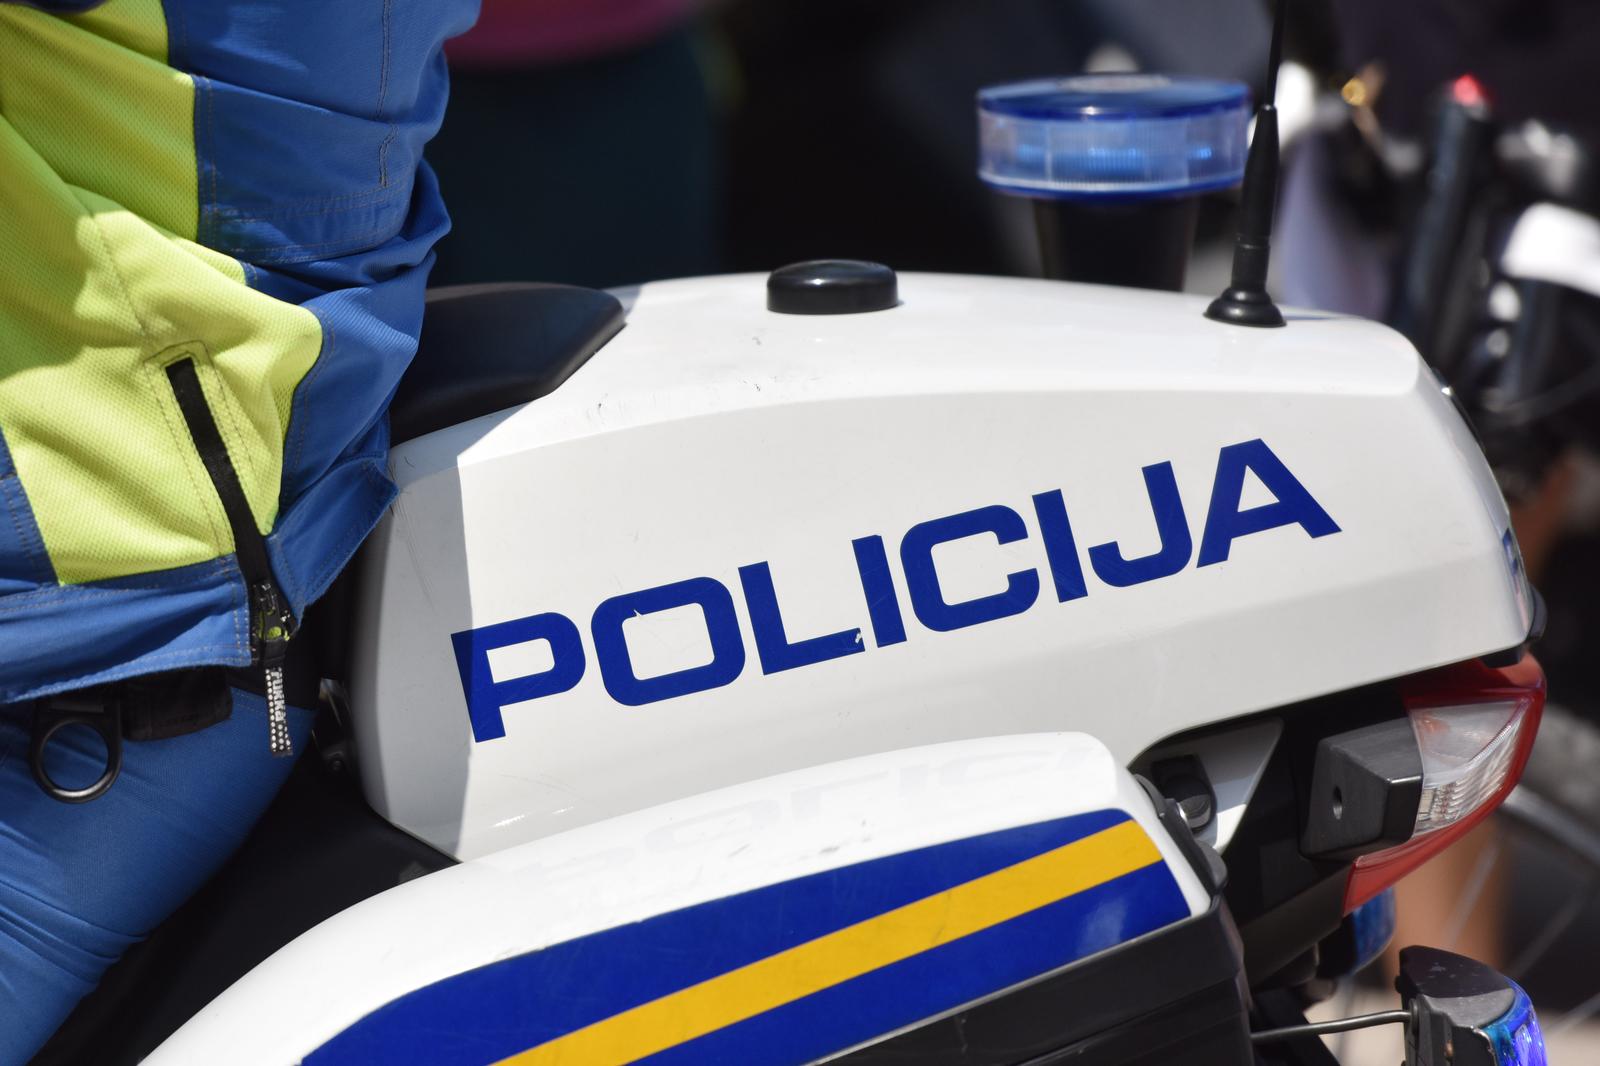 13.05.2018., Sibenik - Oznake na policijskim motorima. "nPhoto: Hrvoje Jelavic/PIXSELL